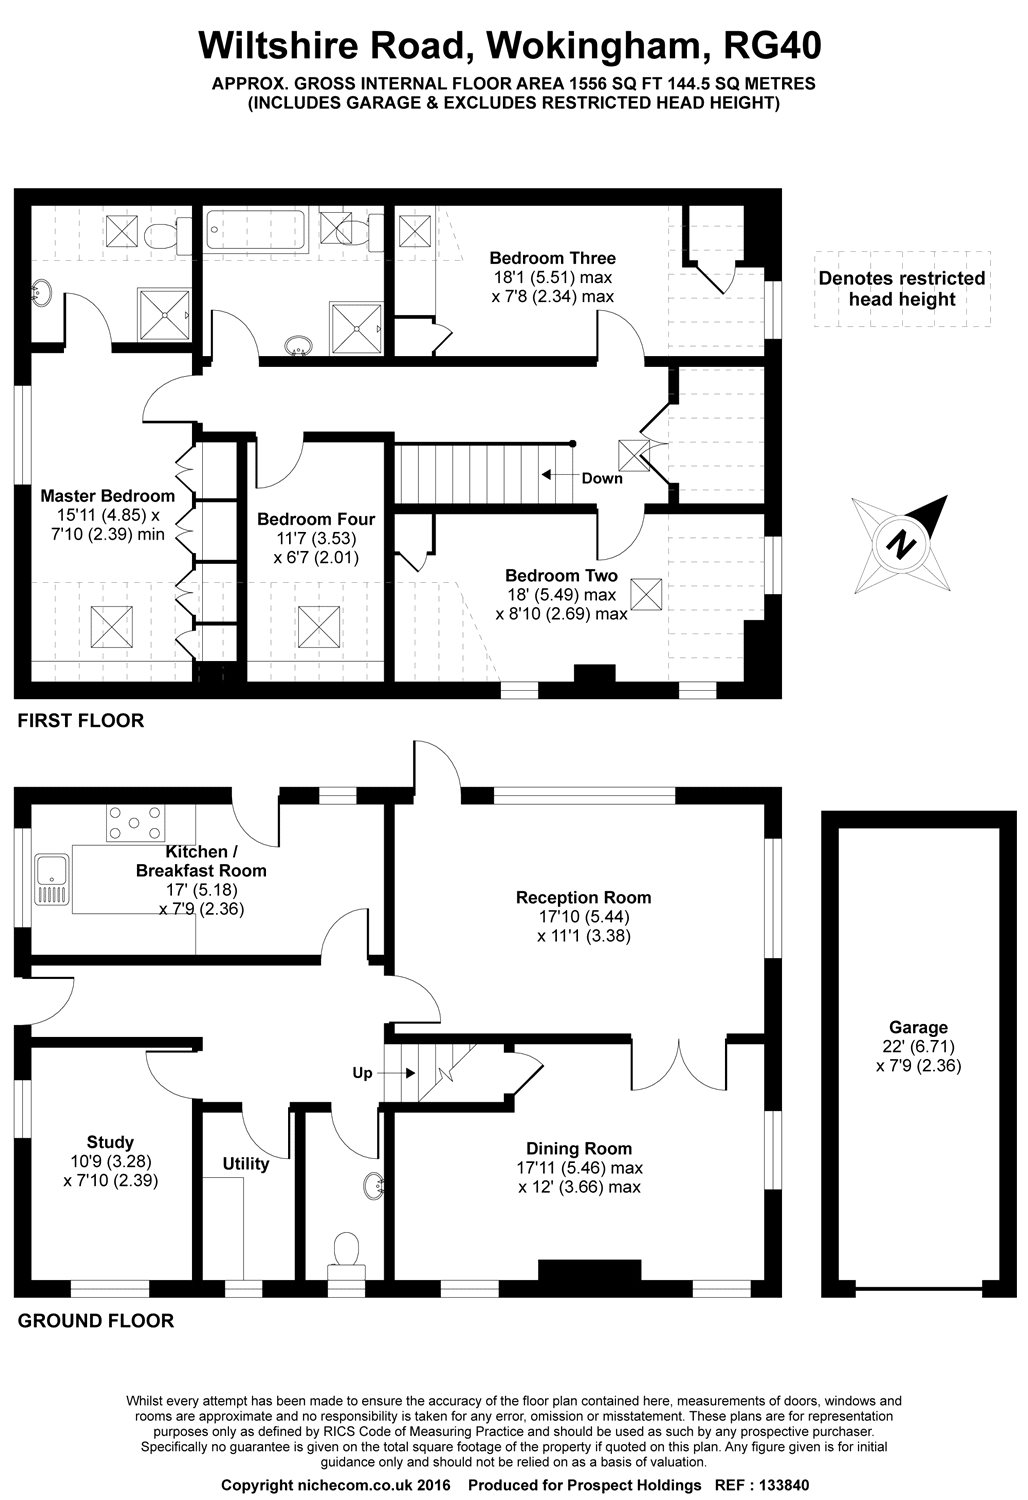 4 Bedrooms Detached house to rent in Wiltshire Road, Wokingham, Berkshire RG40